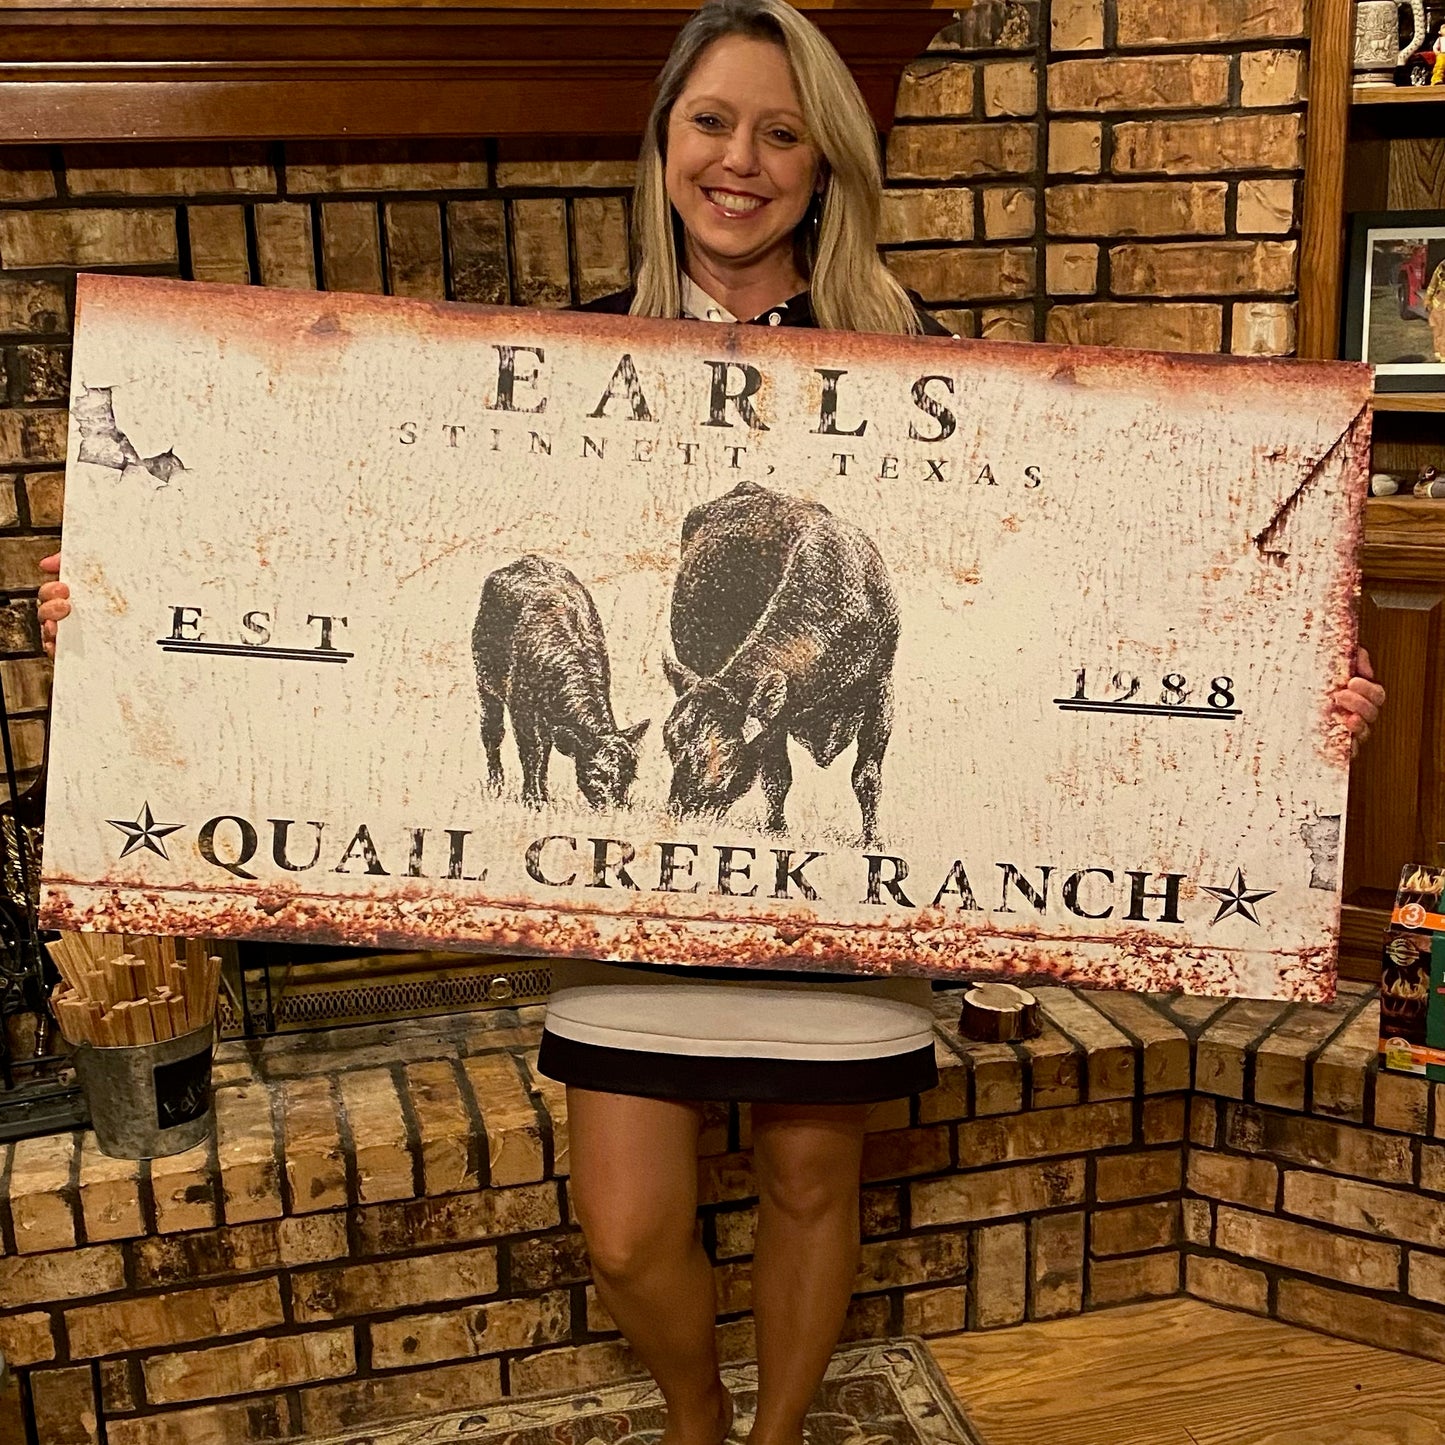 Angus Ranch Sign (Free Shipping)